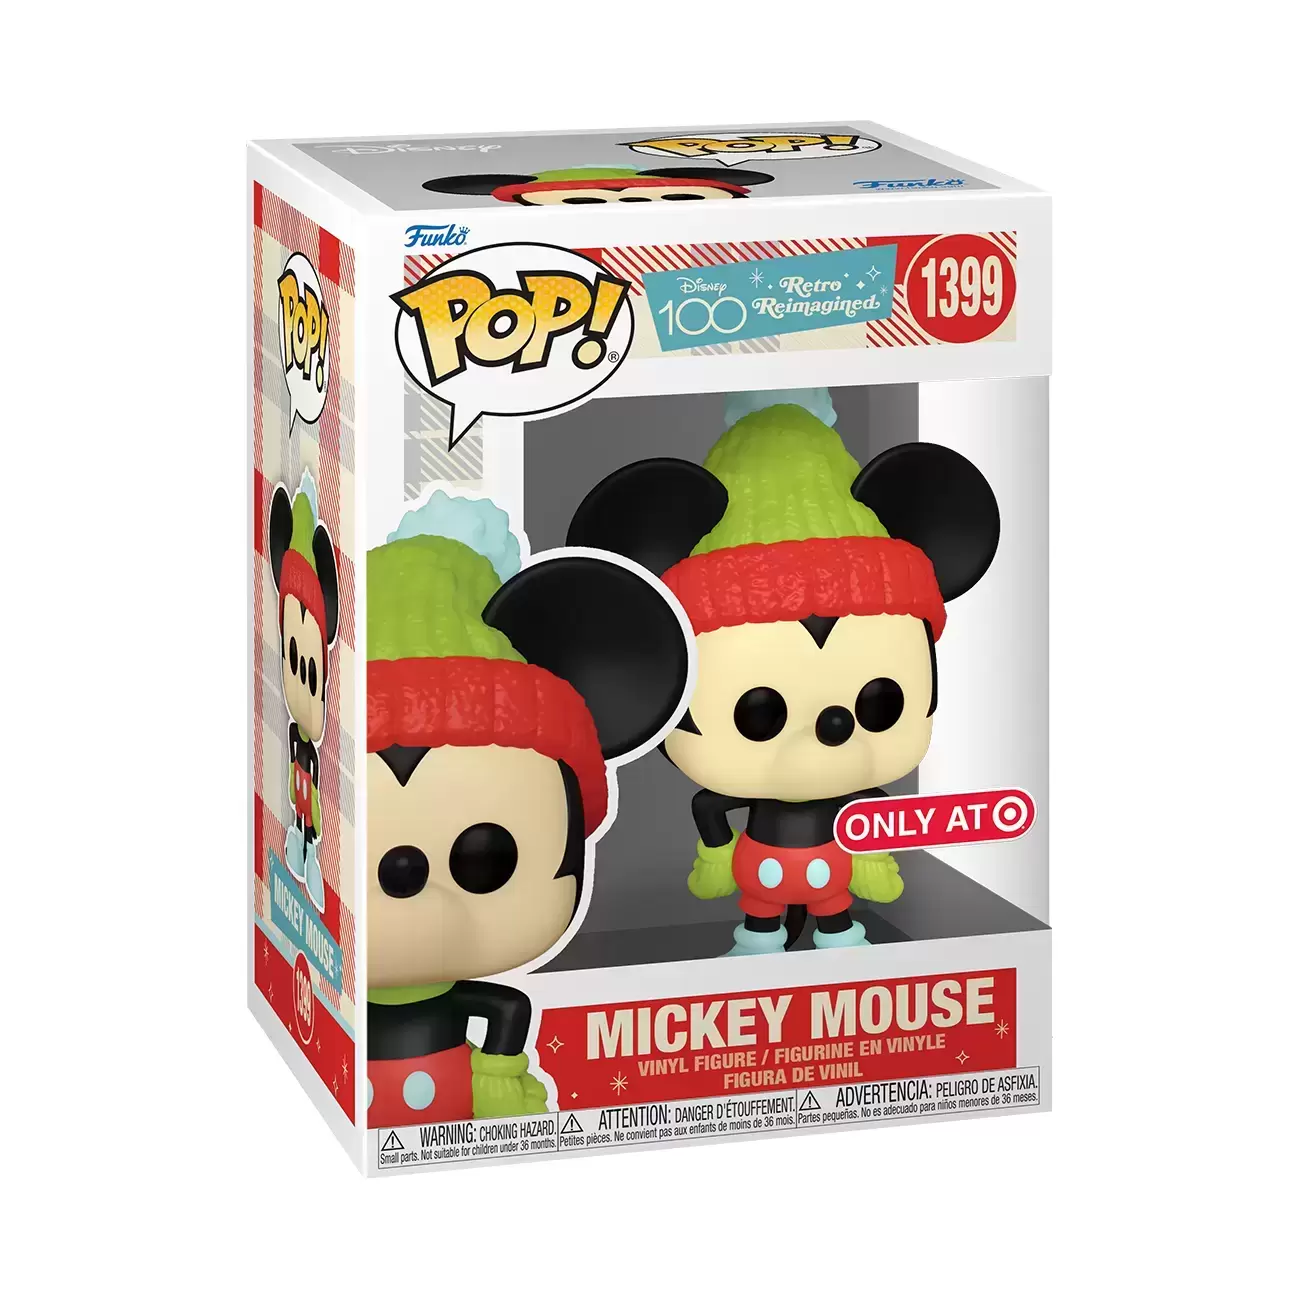 POP! Disney - Disney 100 Retro Reimagined - Mickey Mouse